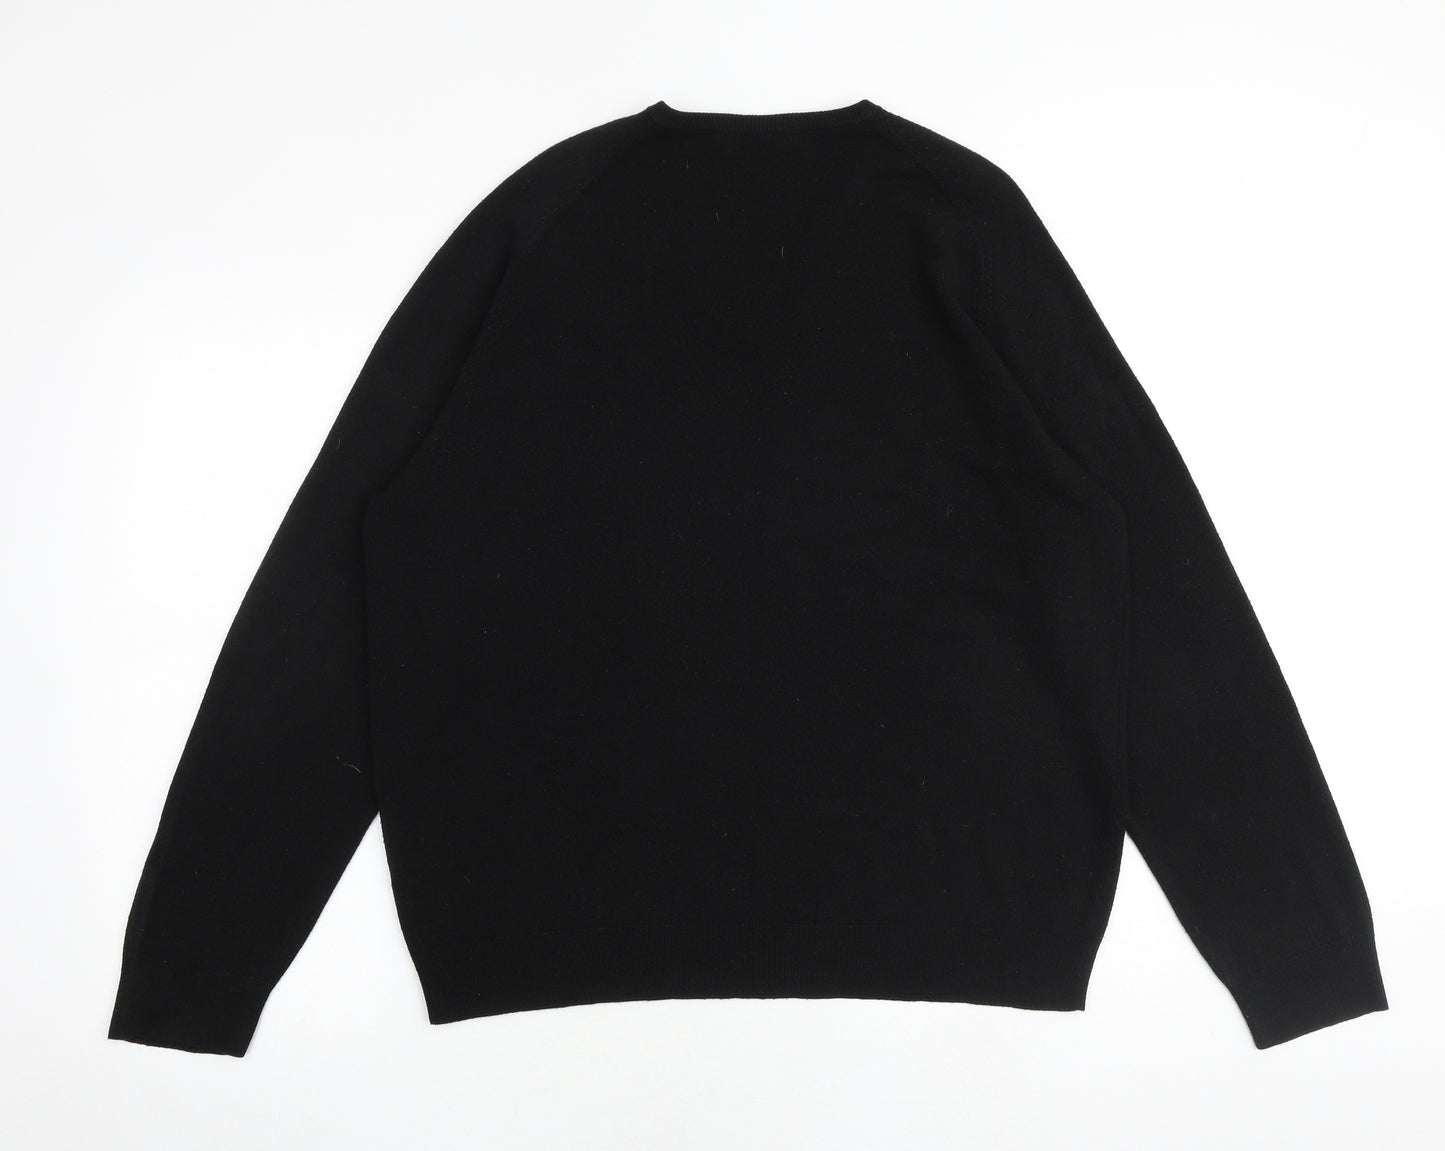 Marks and Spencer Mens Black V-Neck Acrylic Pullover Jumper Size XL Long Sleeve